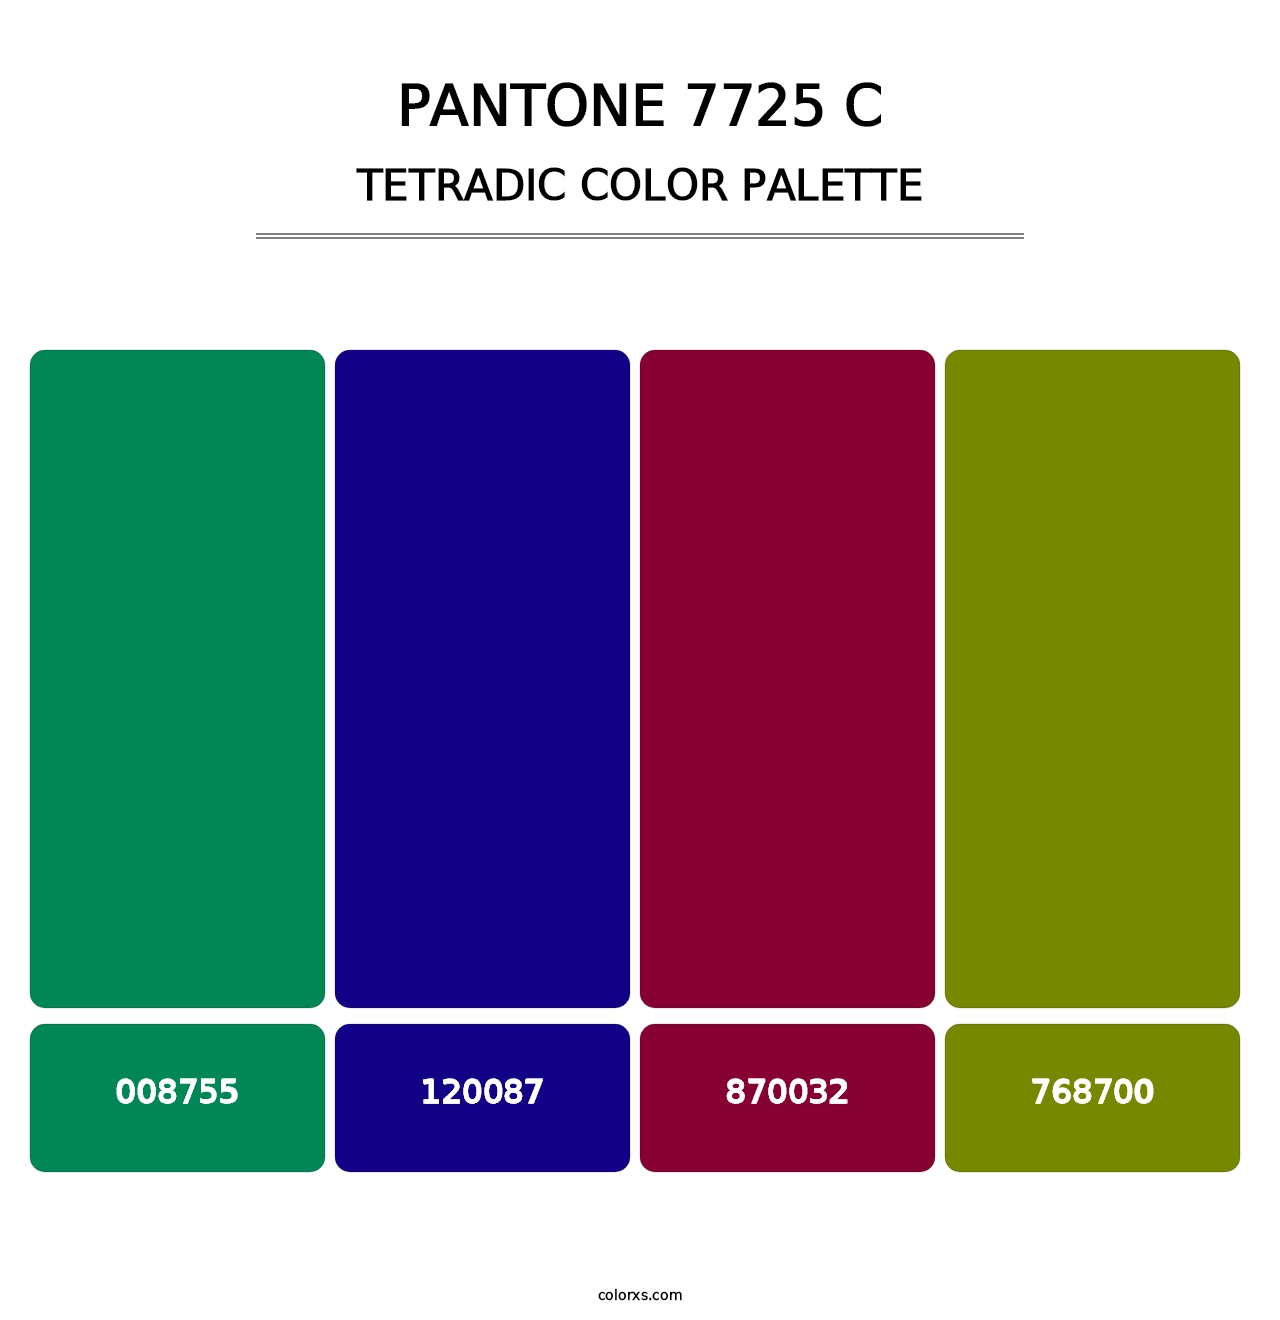 PANTONE 7725 C - Tetradic Color Palette